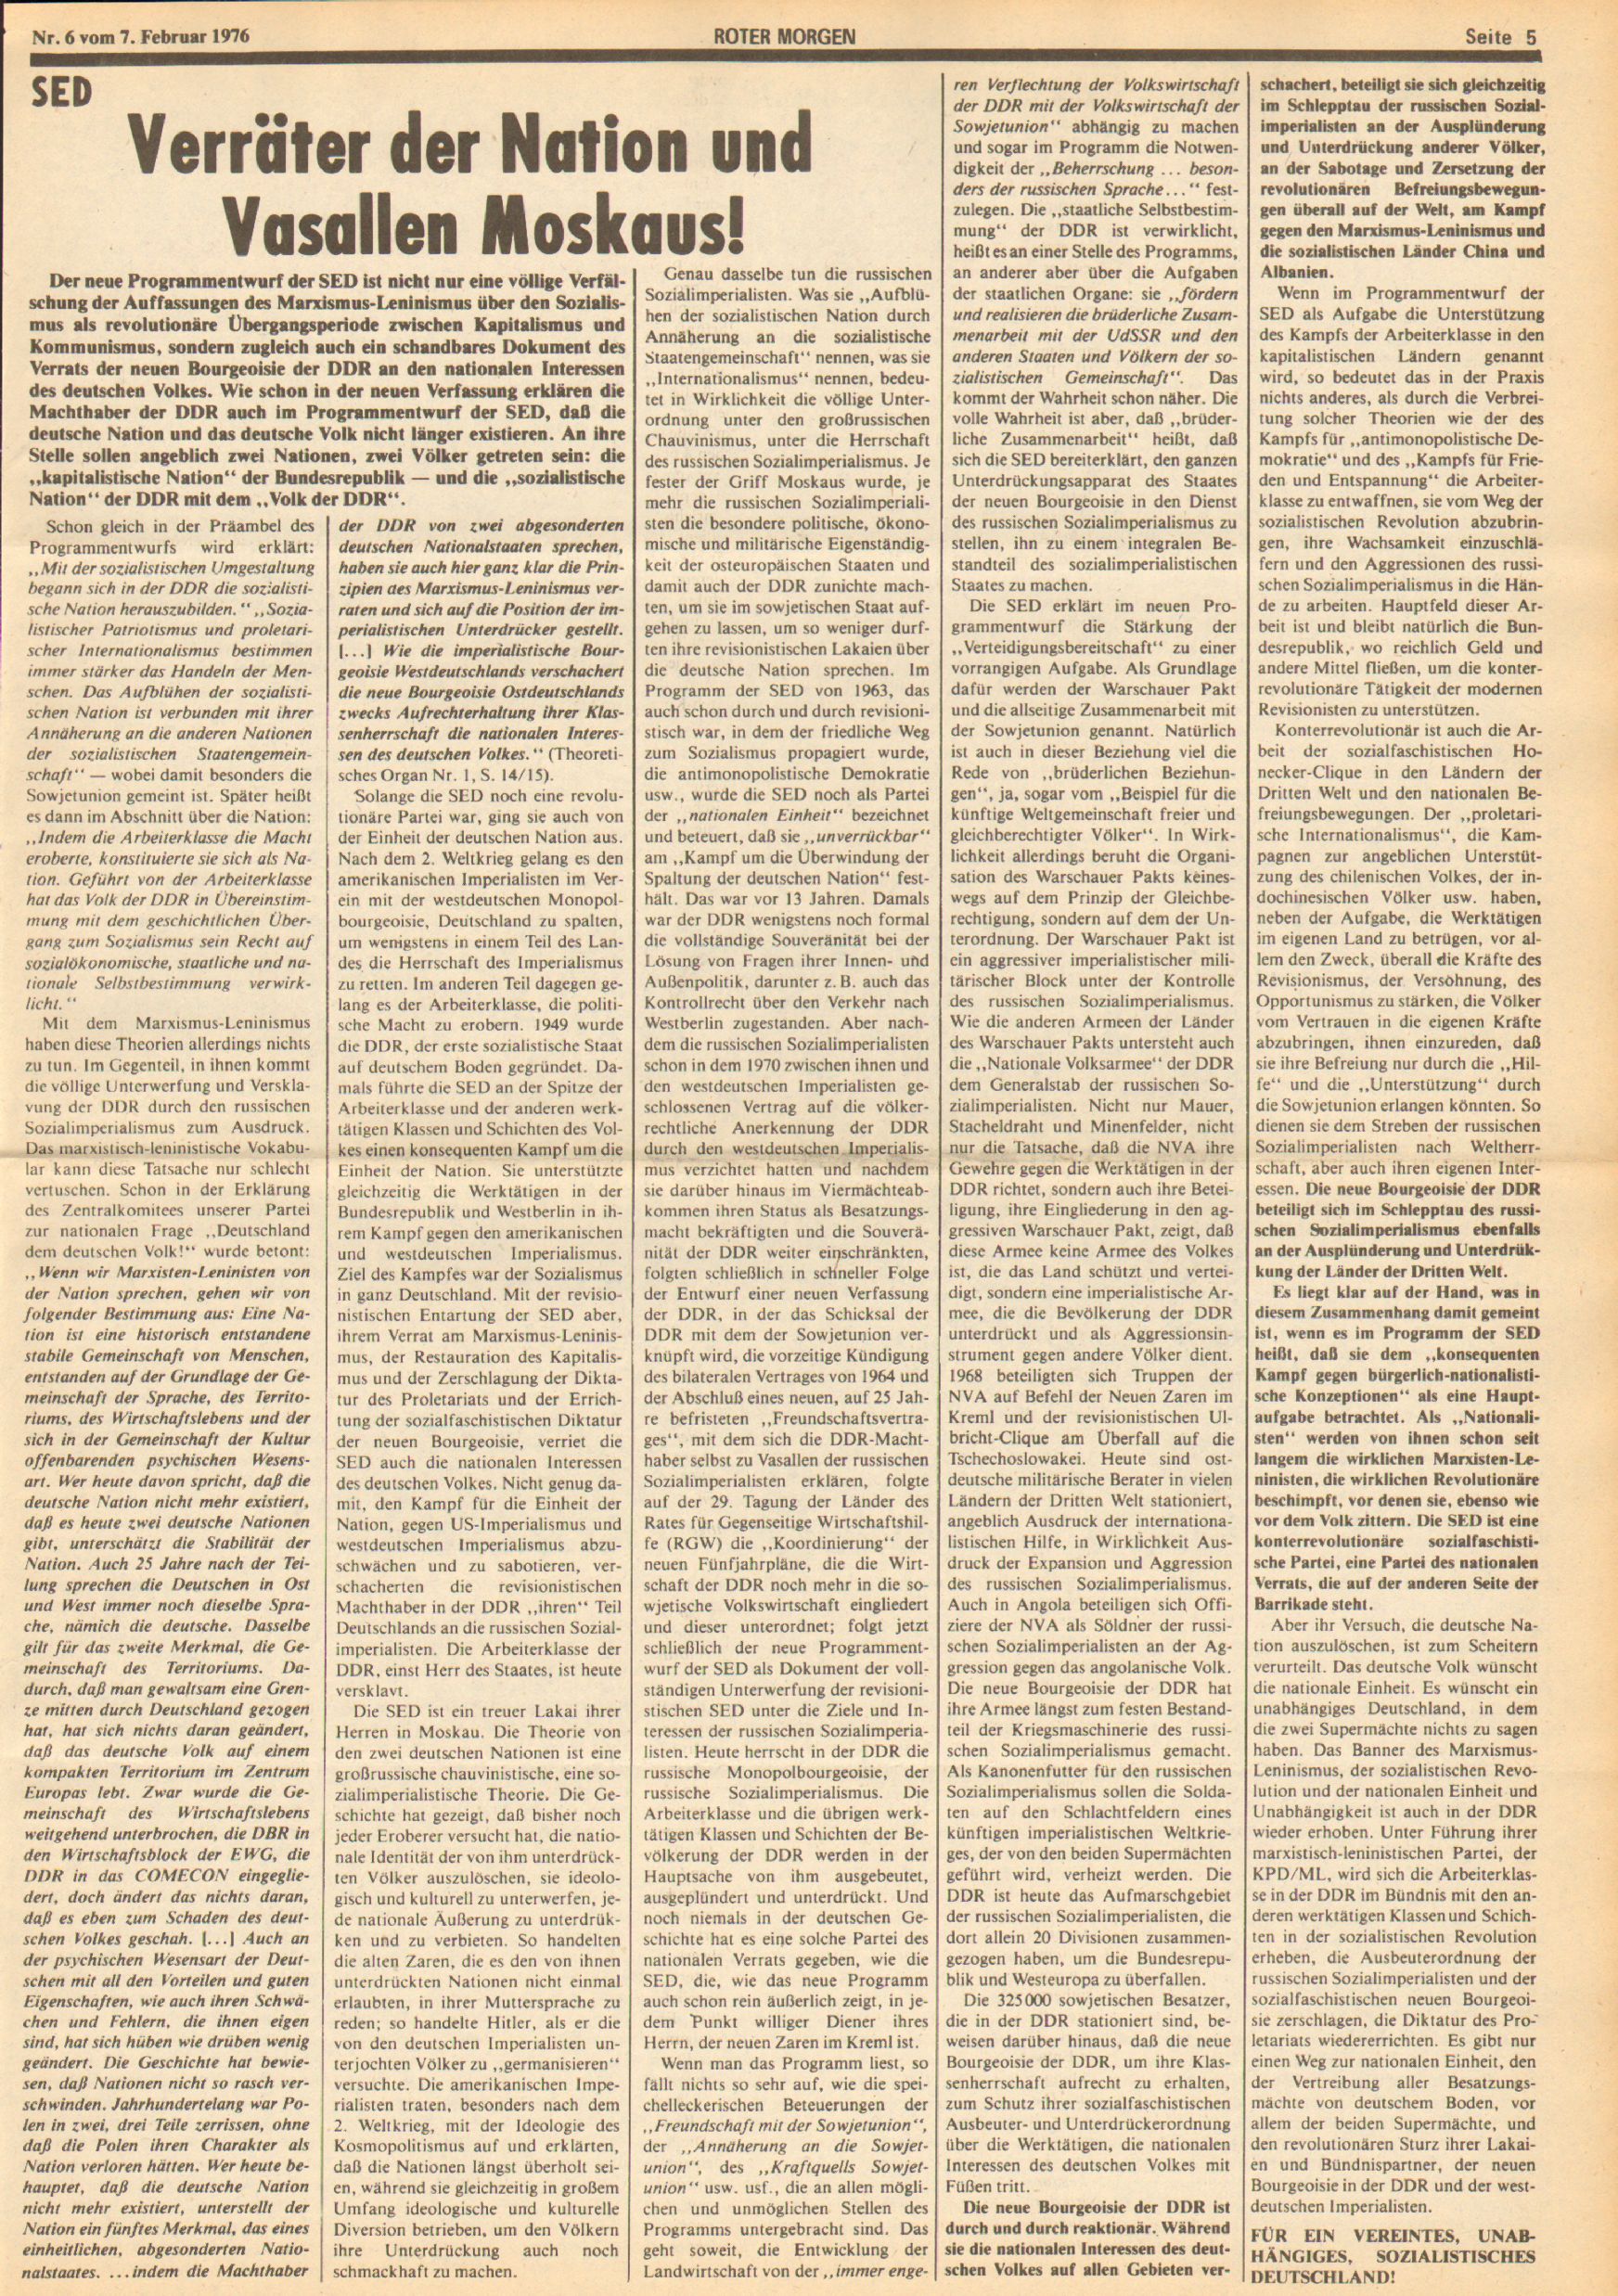 Roter Morgen, 10. Jg., 7. Februar 1976, Nr. 6, Seite 5